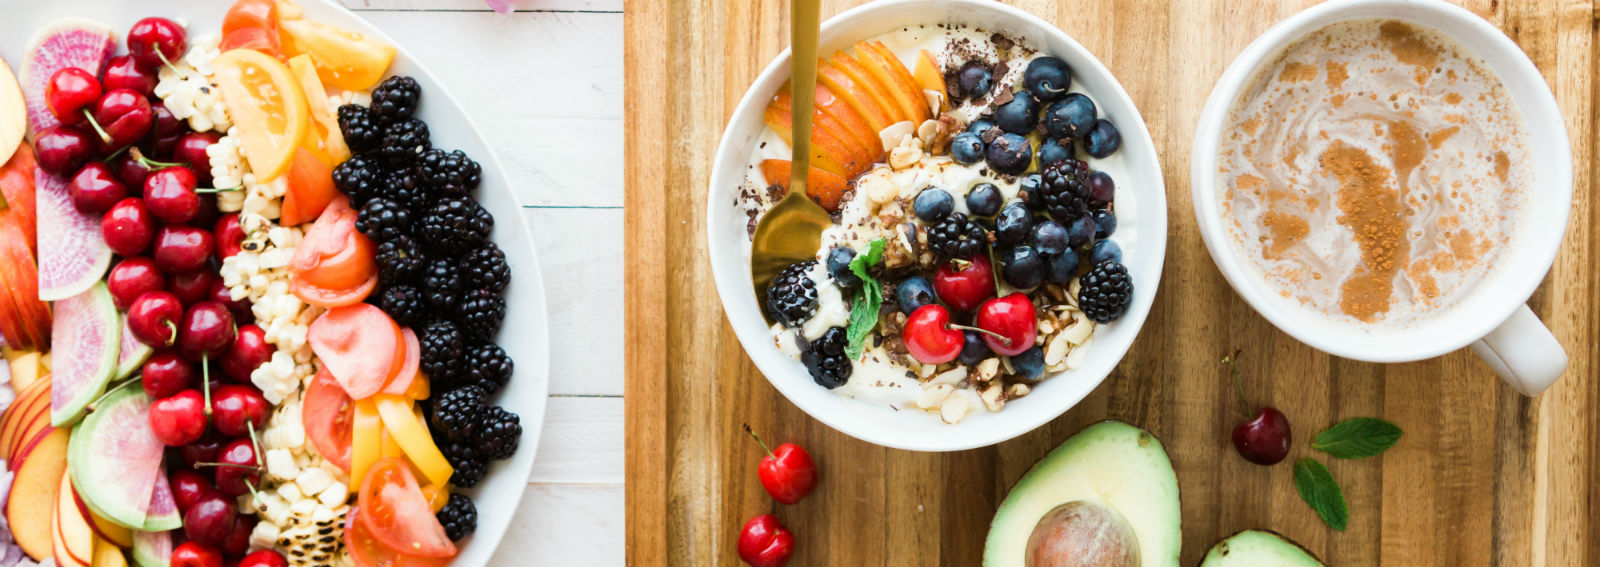 fgranola-muesli-yogurt-healthy-food-fruits-breakfast